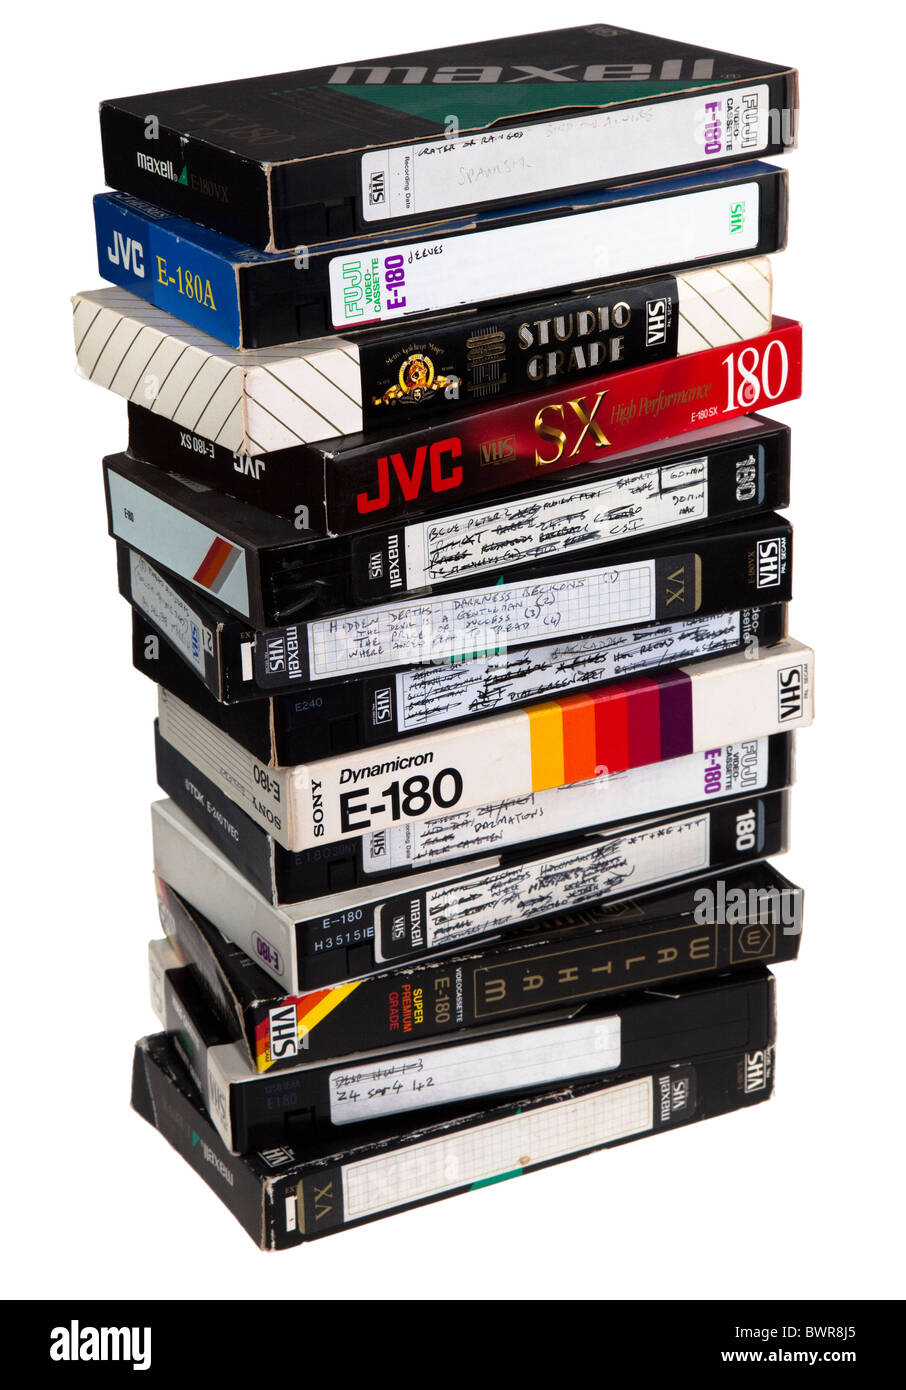 Vhs video tapes fotografías e imágenes de alta resolución - Alamy